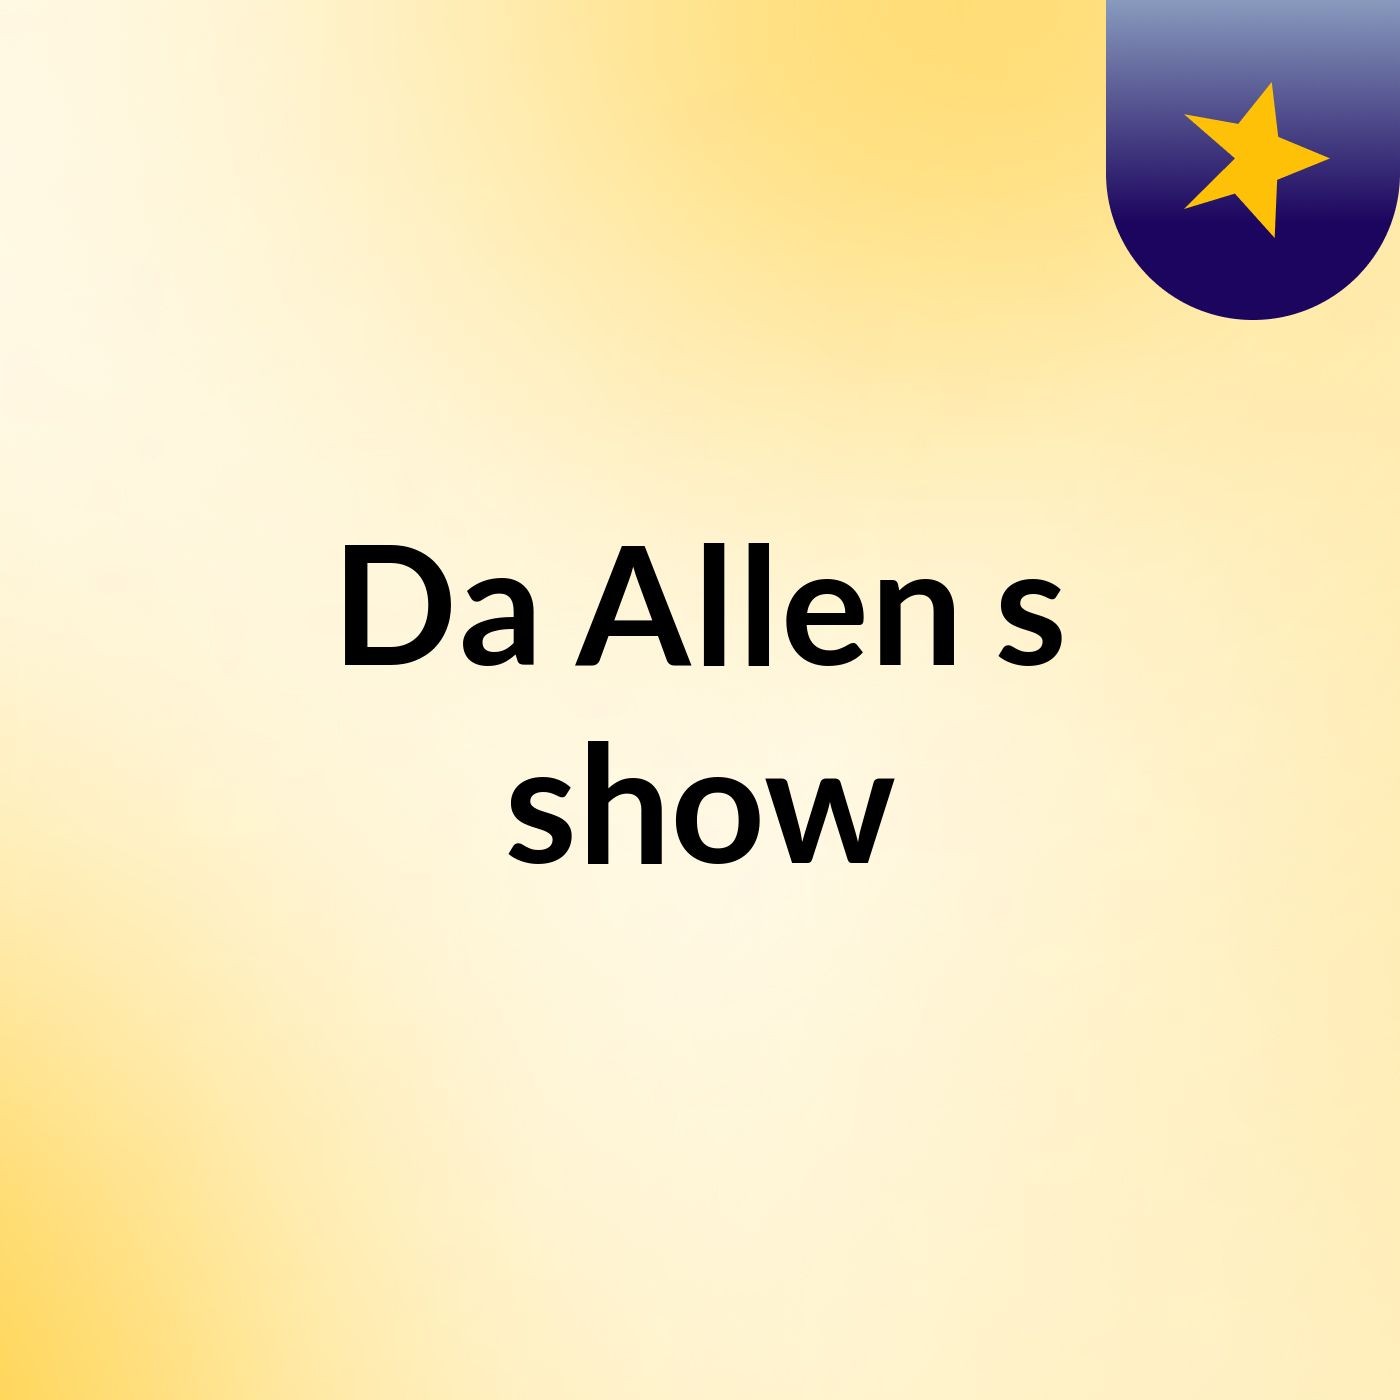 Da Allen's show